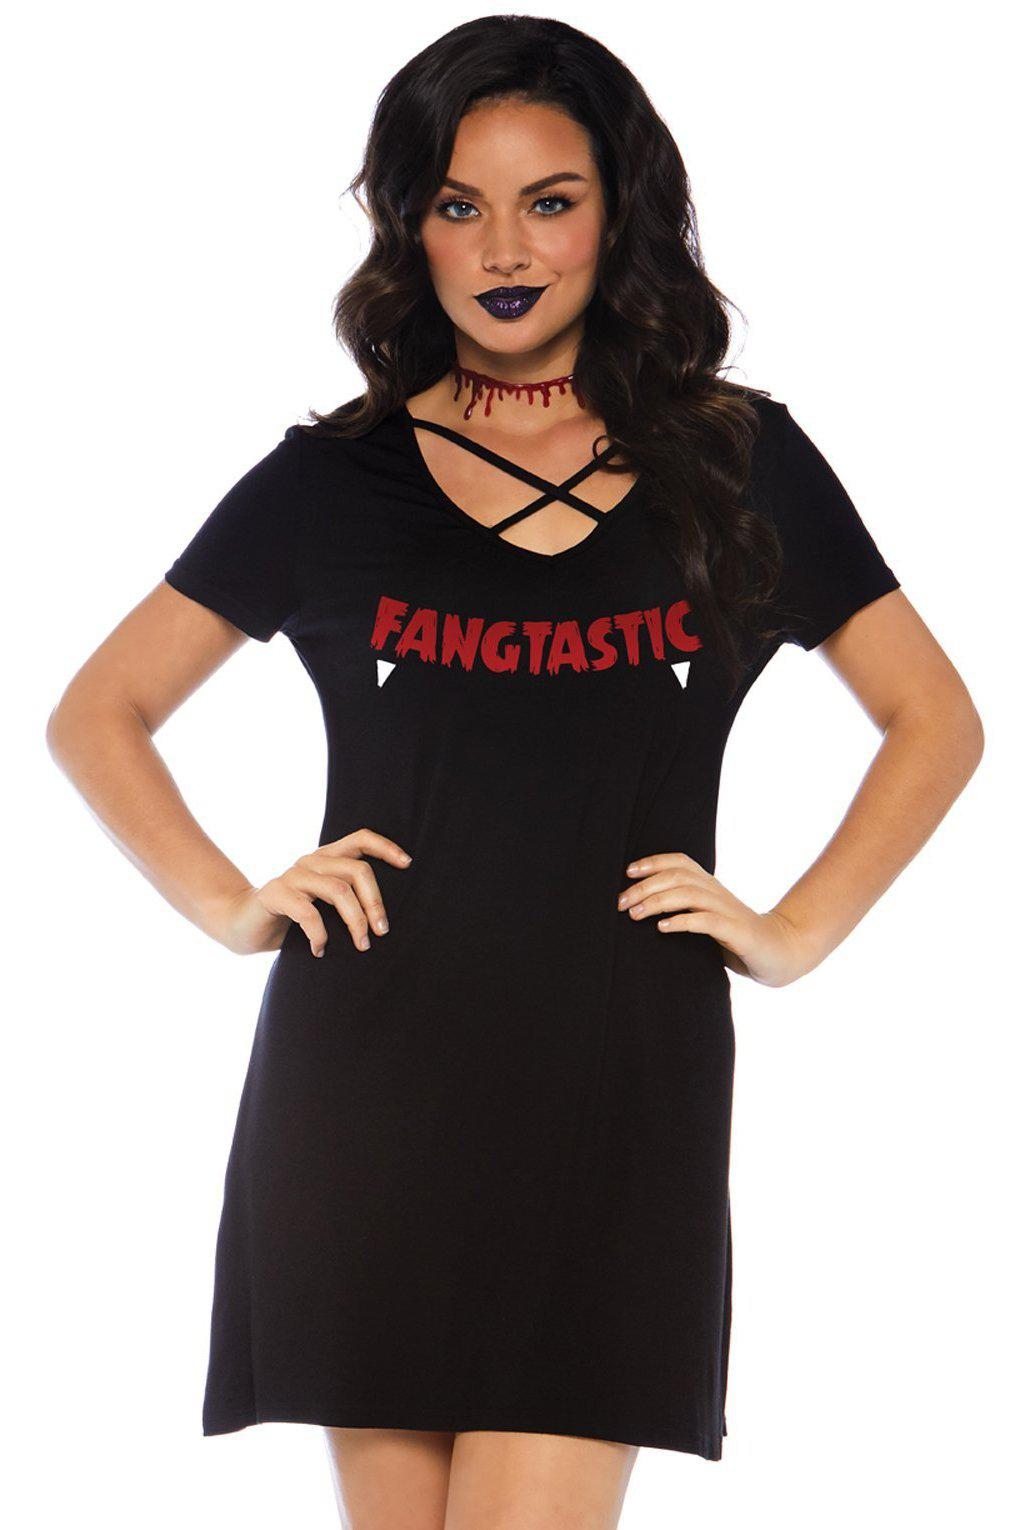 Fangtastic Jersey Costume Dress-Animal Costumes-Leg Avenue-Black-S-SEXYSHOES.COM